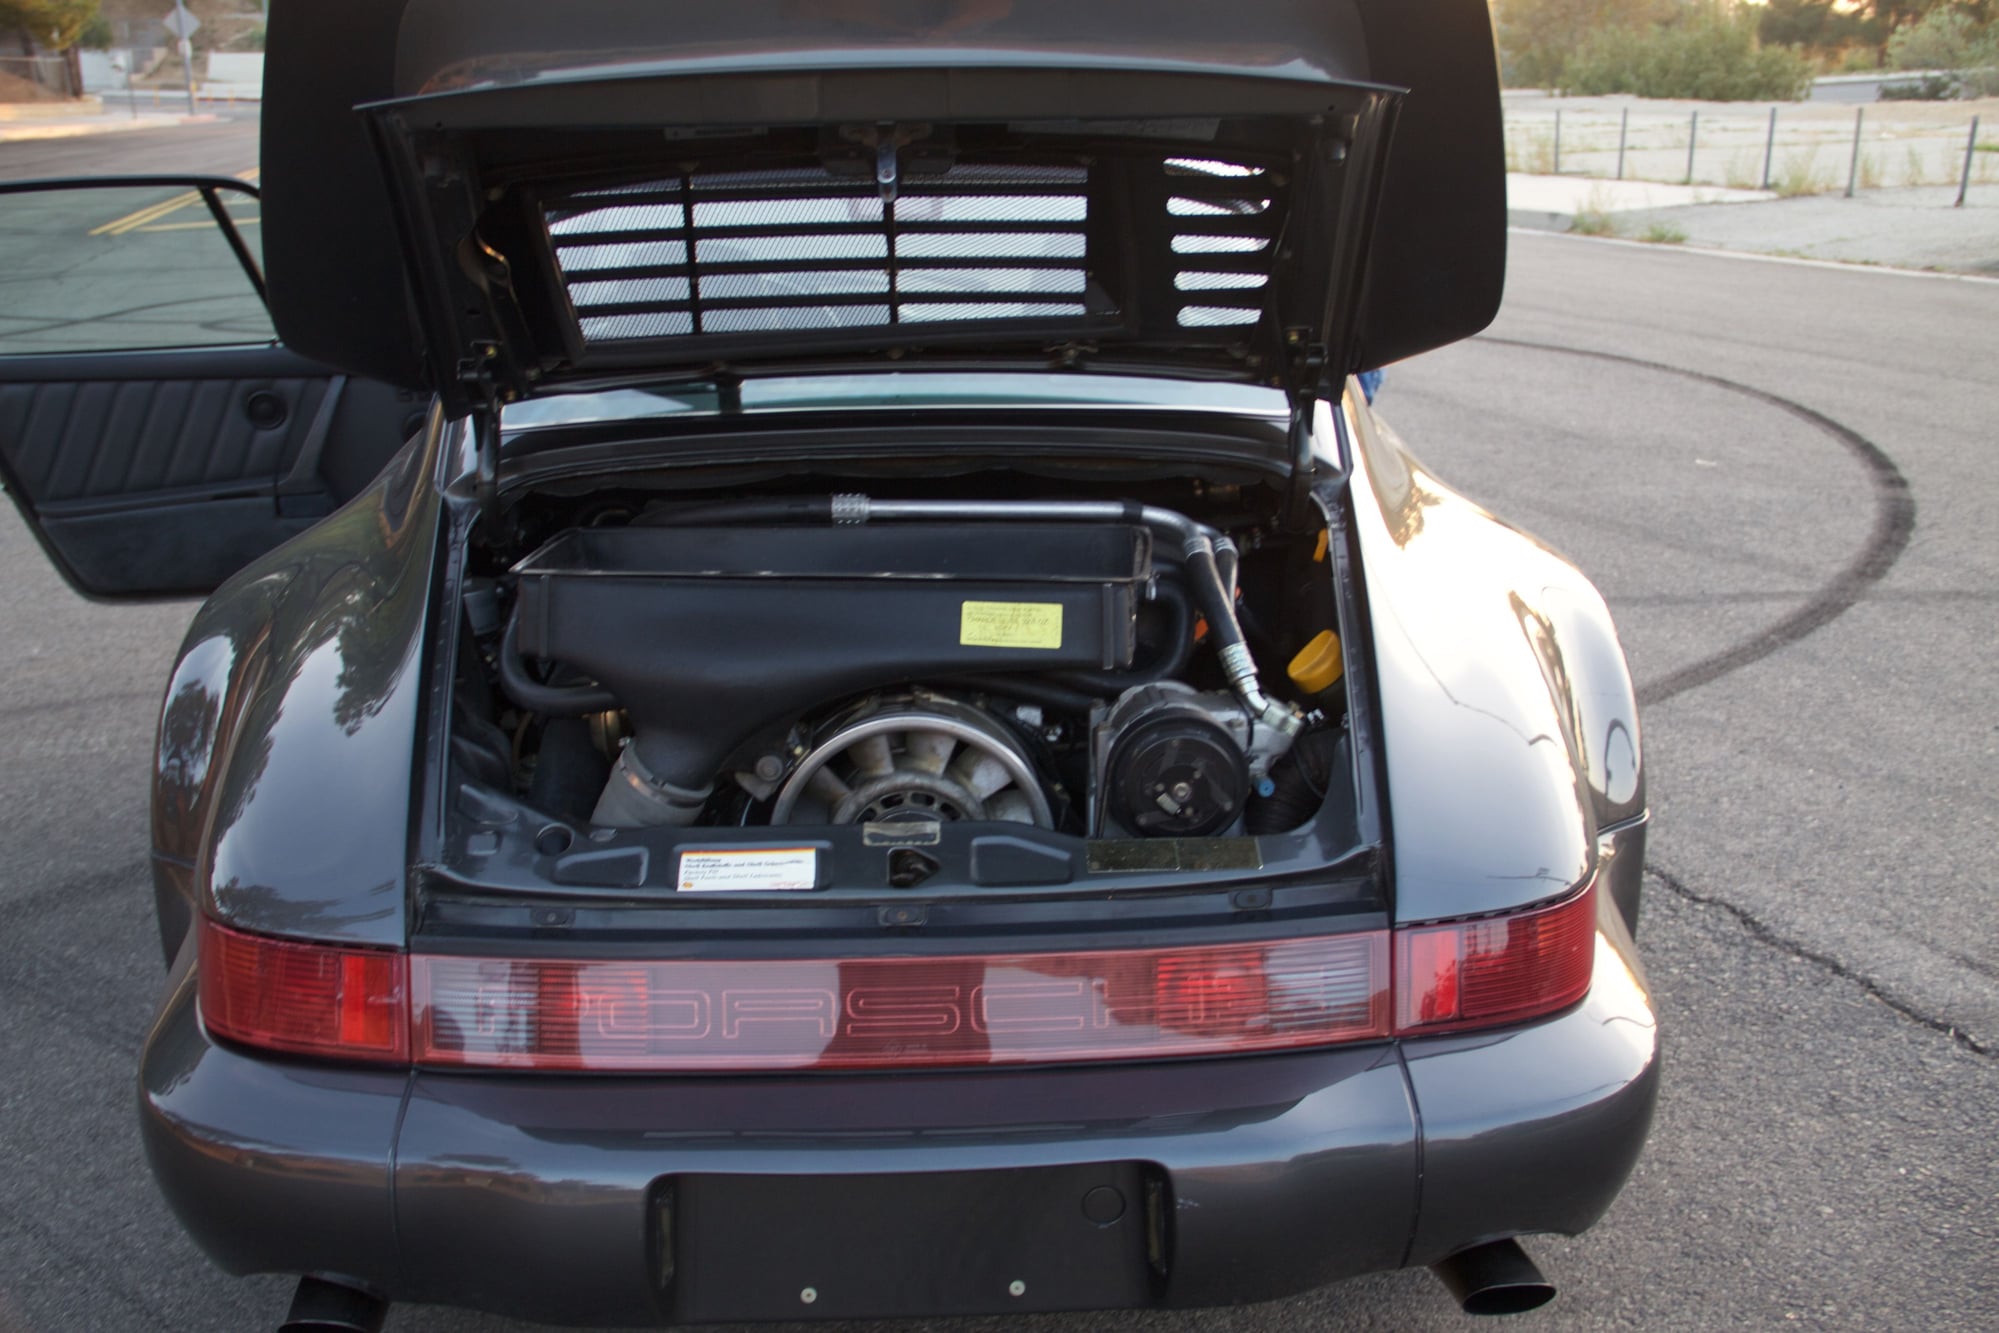 1991 Porsche 911 - 1991 Porsche 964 Turbo - Slate Grey - Used - VIN WP0AA2961MS480497 - 51,700 Miles - 2WD - Manual - Coupe - Gray - Tarzana, CA 91356, United States